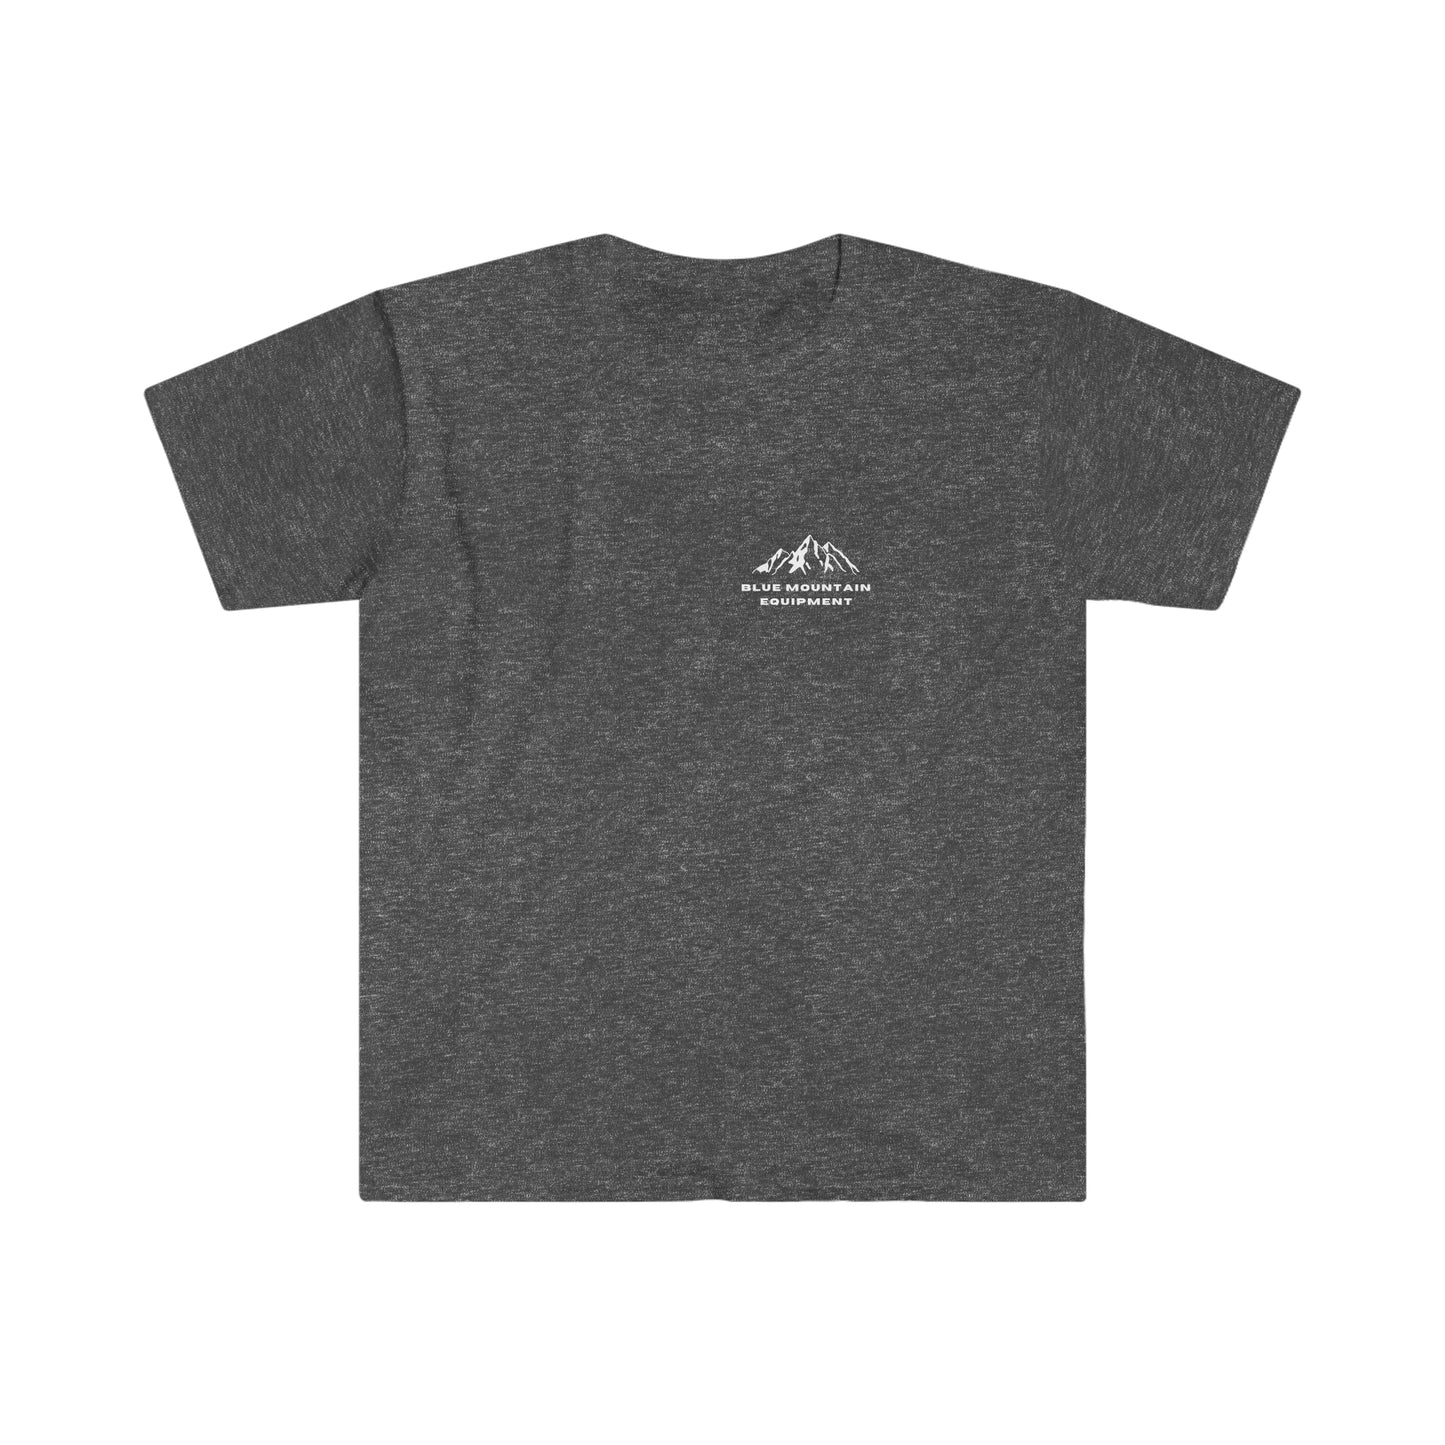 Unisex Soft-Style T-Shirt - 99 Problems - Kayak